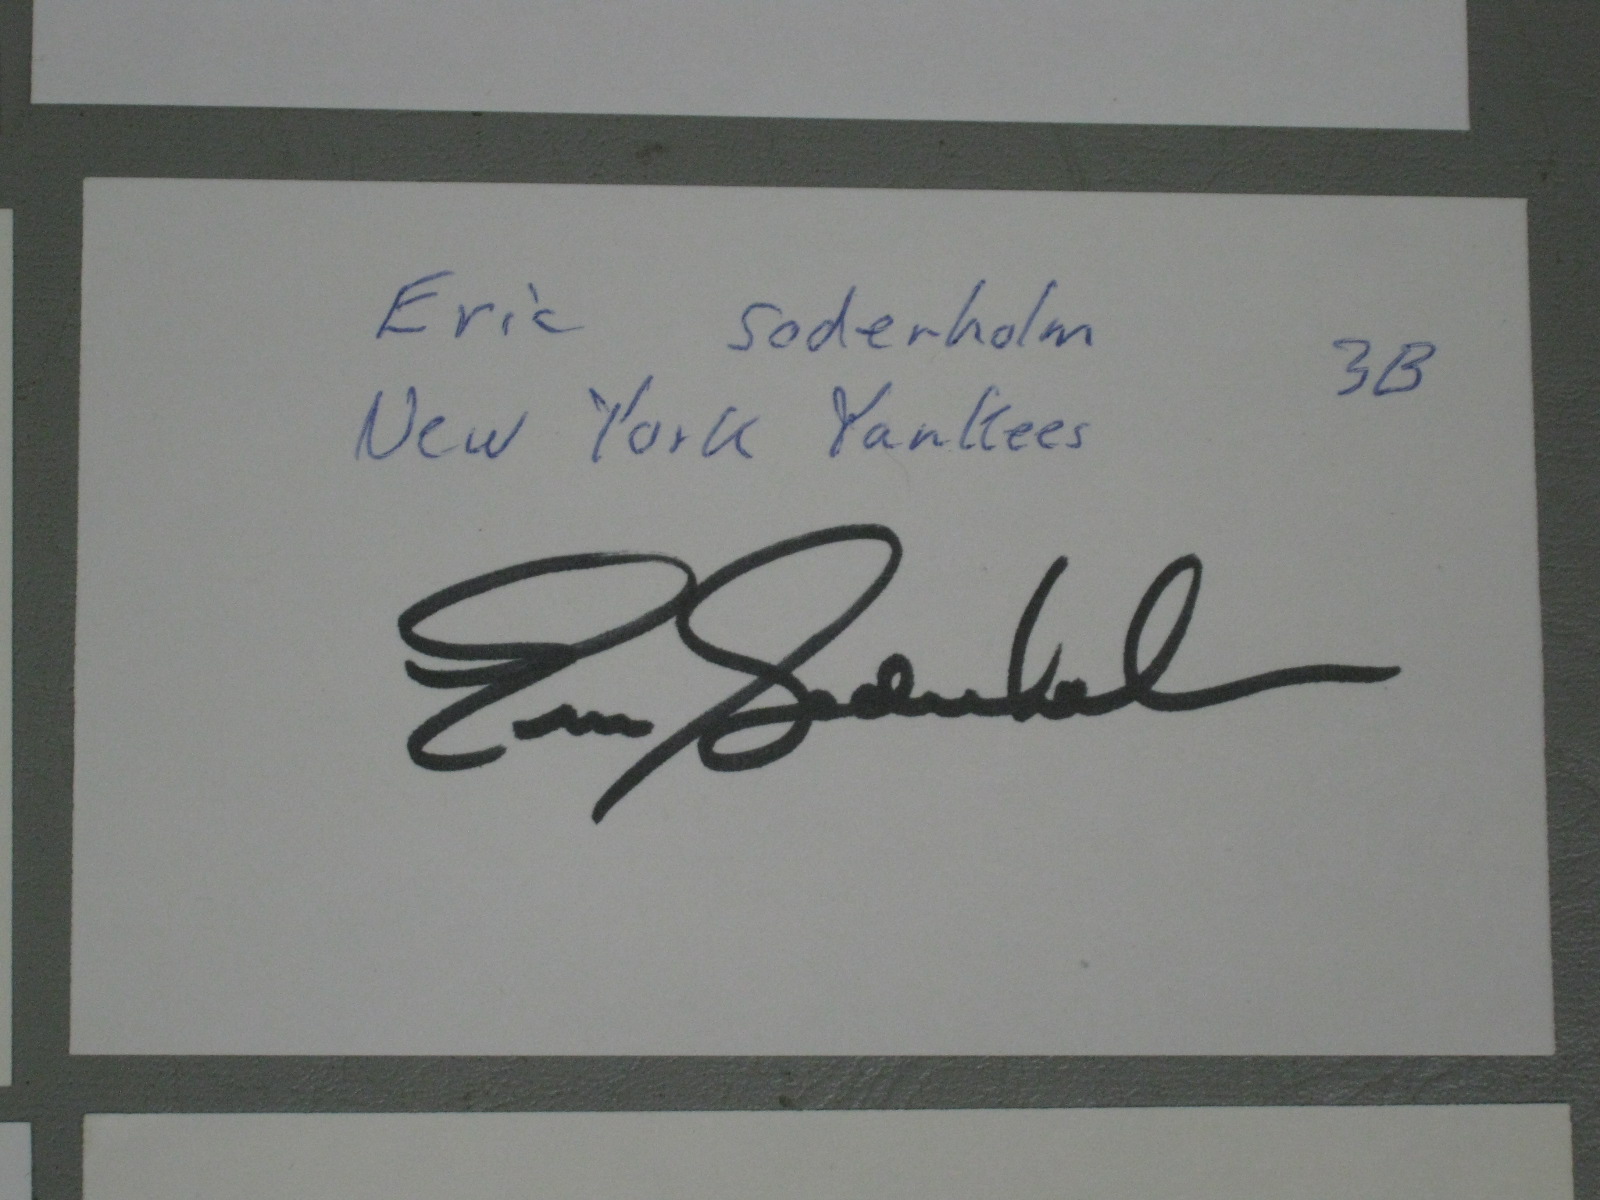 185 Vtg NY Yankees Baseball Player Signed Autograph Card Lot 1940s-90s HOF + NR! 4